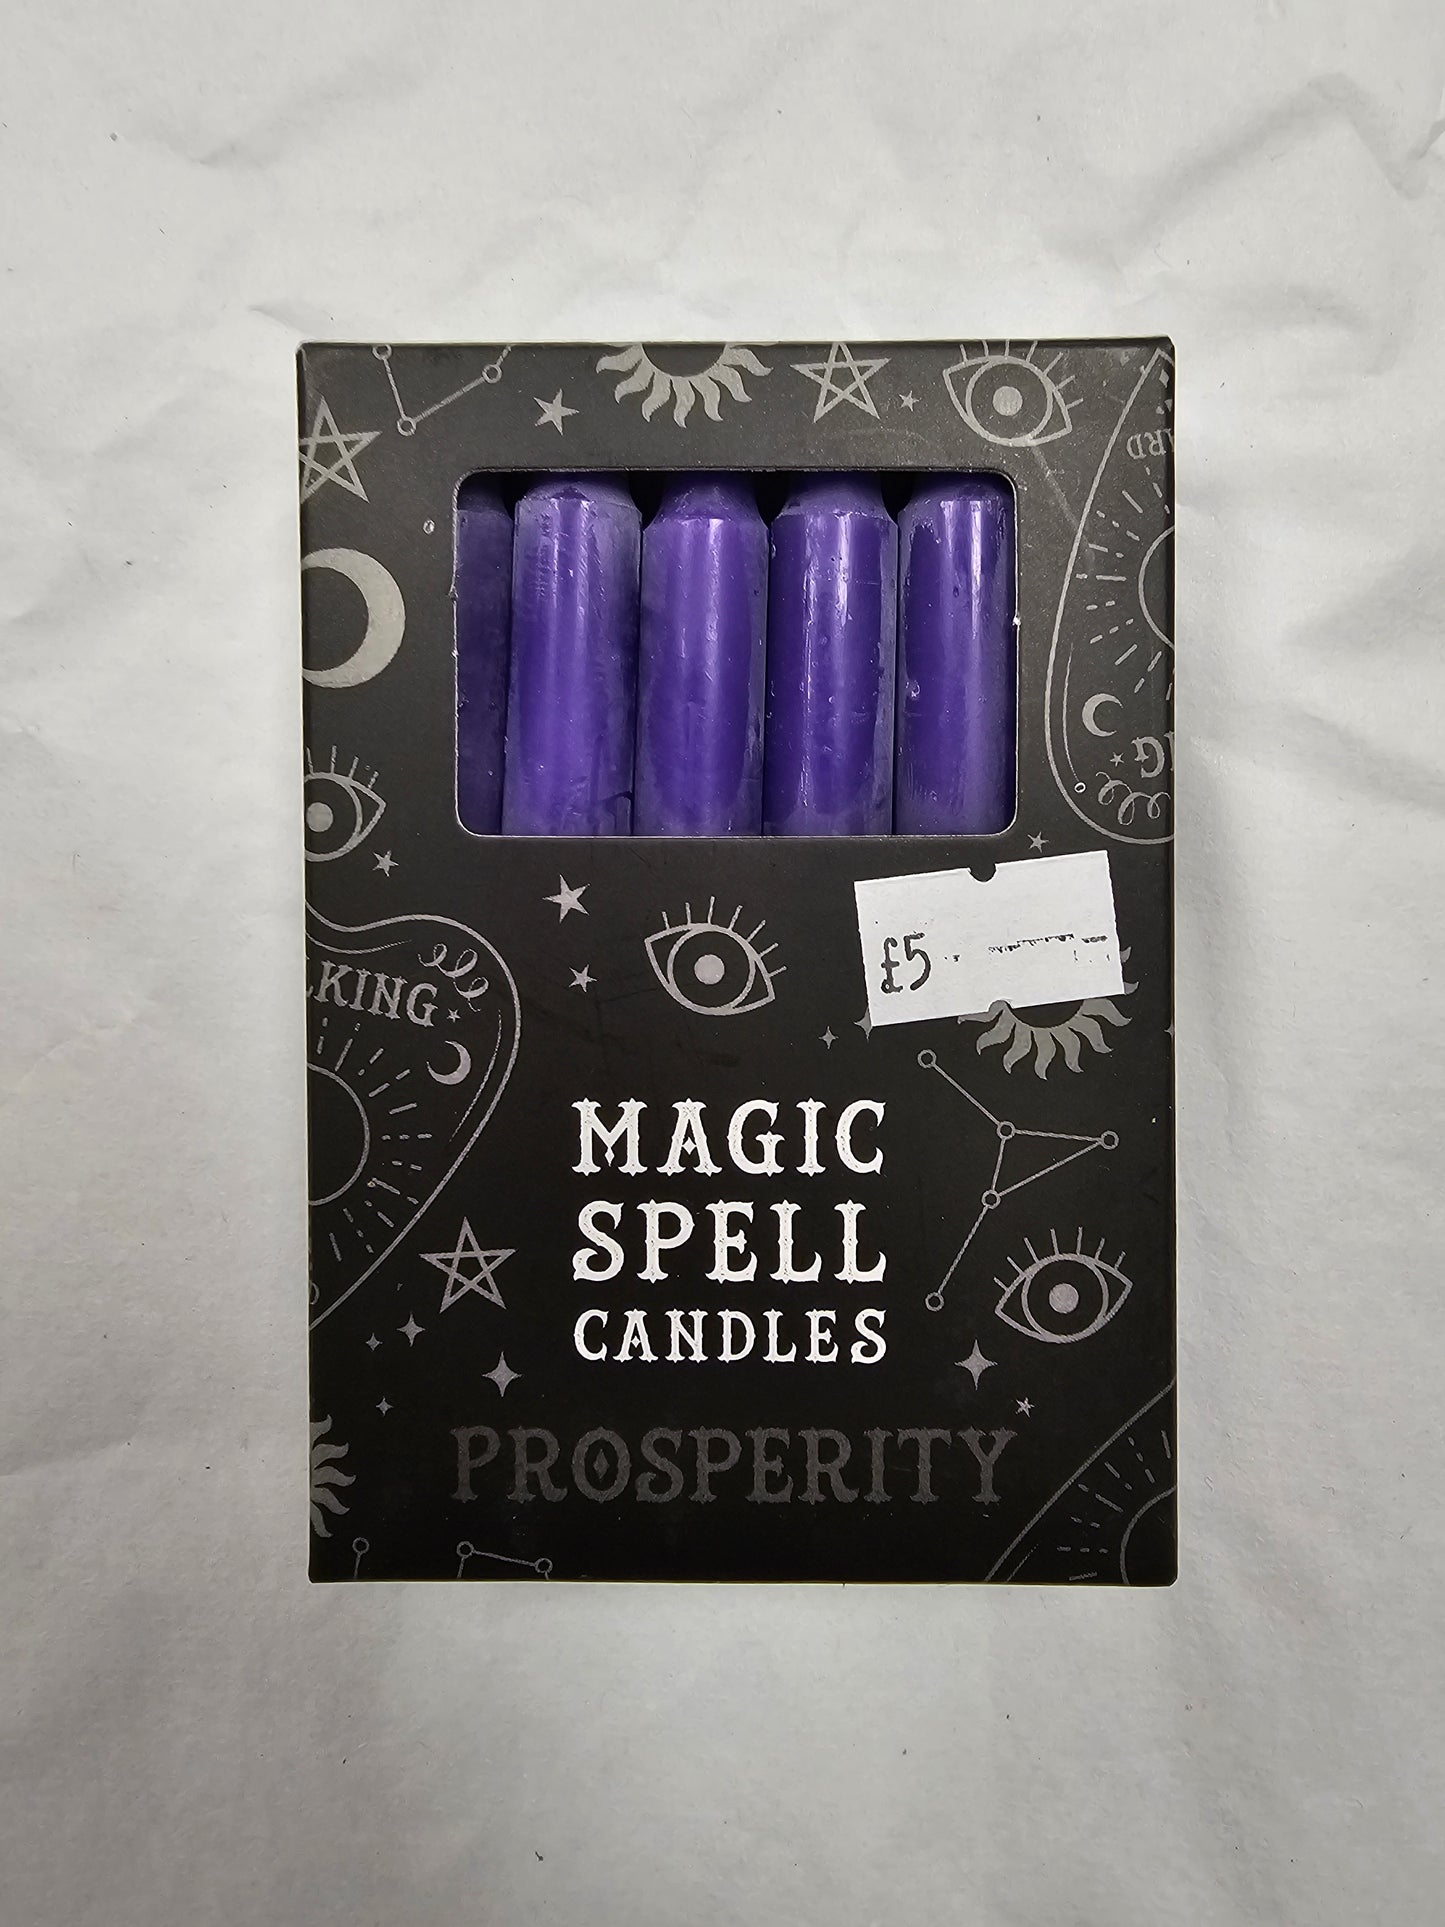 Purple spell candles (prosperity)